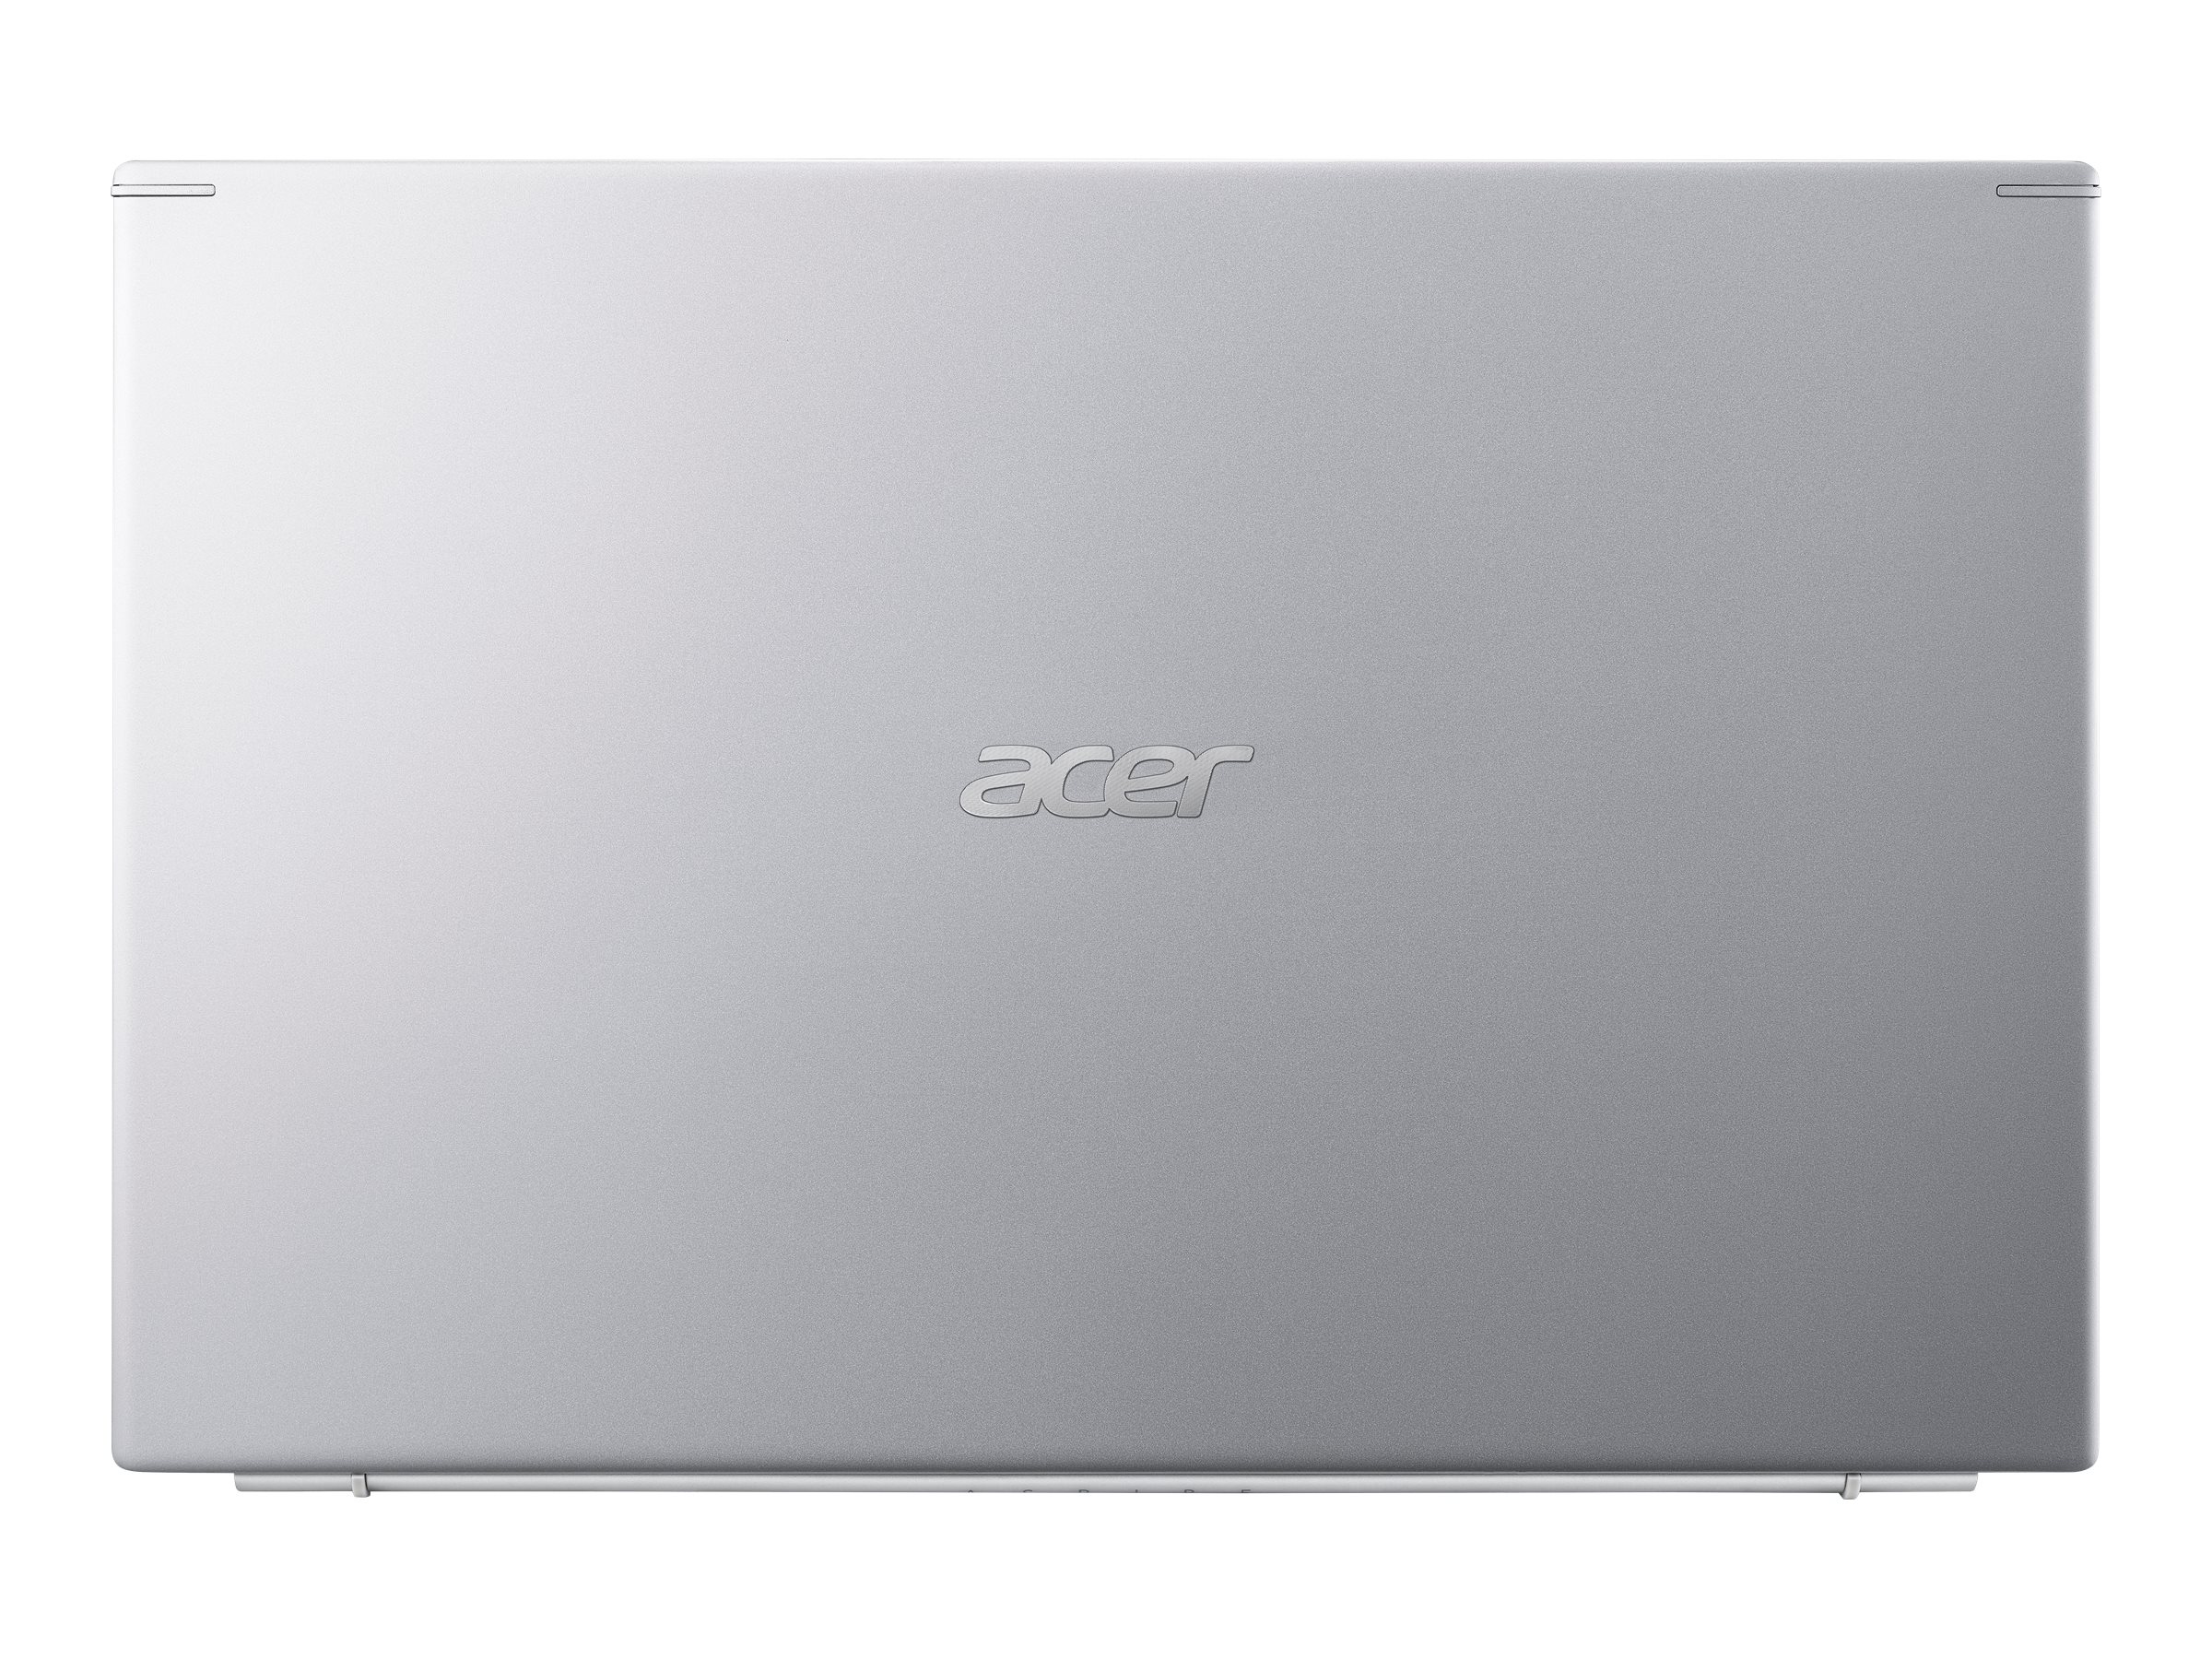 Acer Aspire 5 A515-56-36UT Slim Laptop | 15.6" Full HD Display | 11th Gen Intel Core i3-1115G4 Processor | 4GB DDR4 | 128GB NVMe SSD | WiFi 6 | Amazon Alexa | Windows 10 Home (S Mode) - image 5 of 8